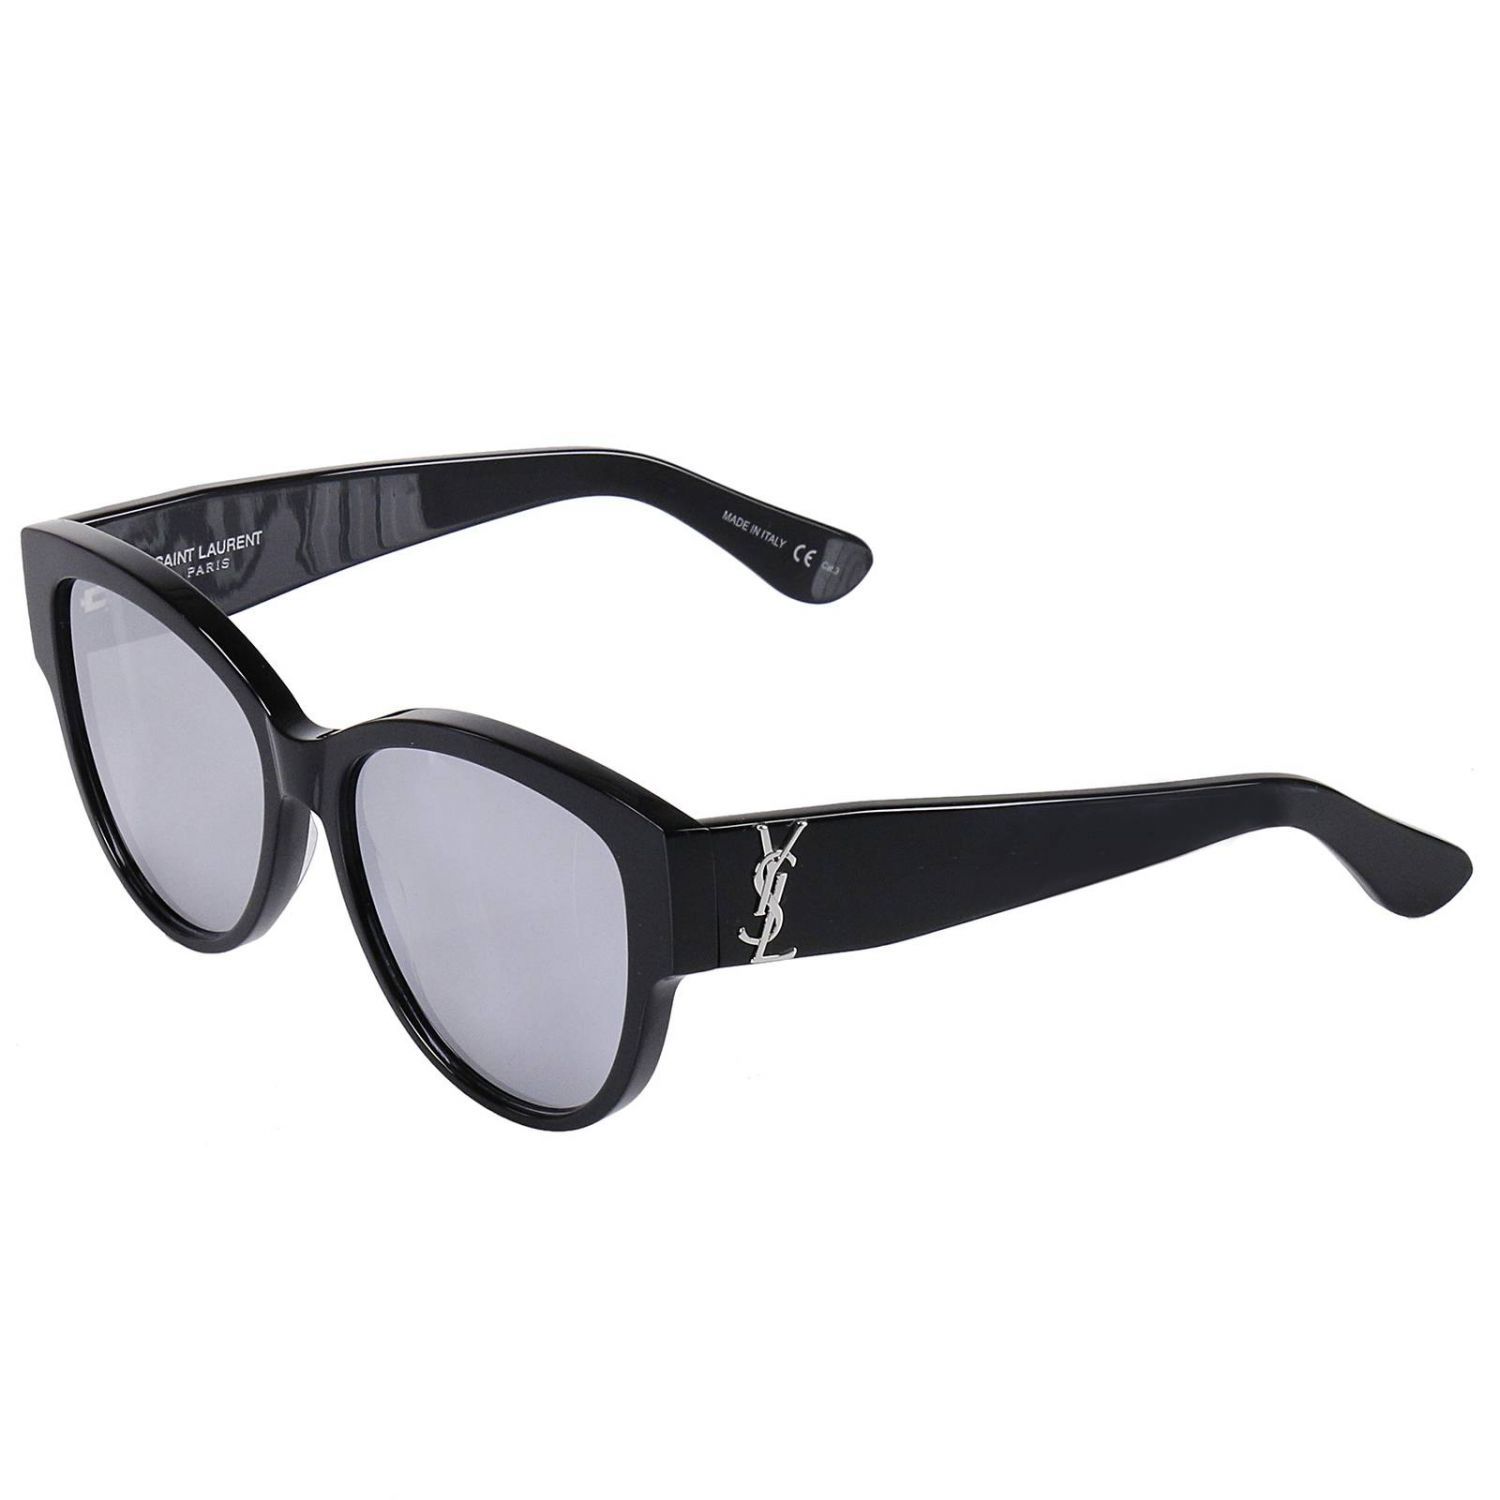 Saint Laurent - Sunglasses Eyewear Women Saint Laurent - black, Women's